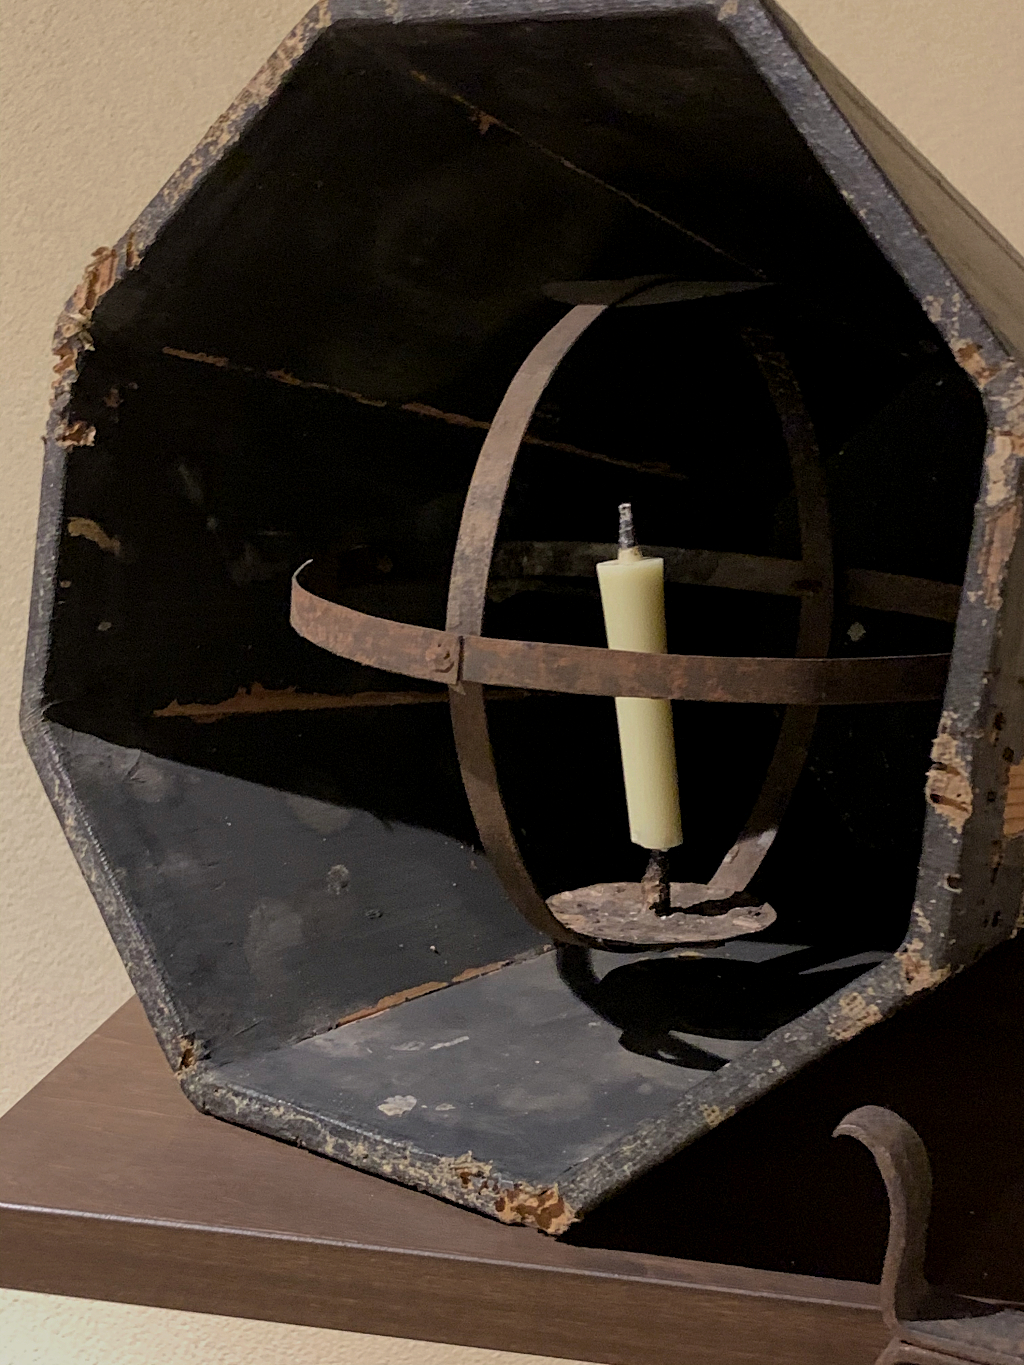 A cover-able candle balanced on a gyroscope